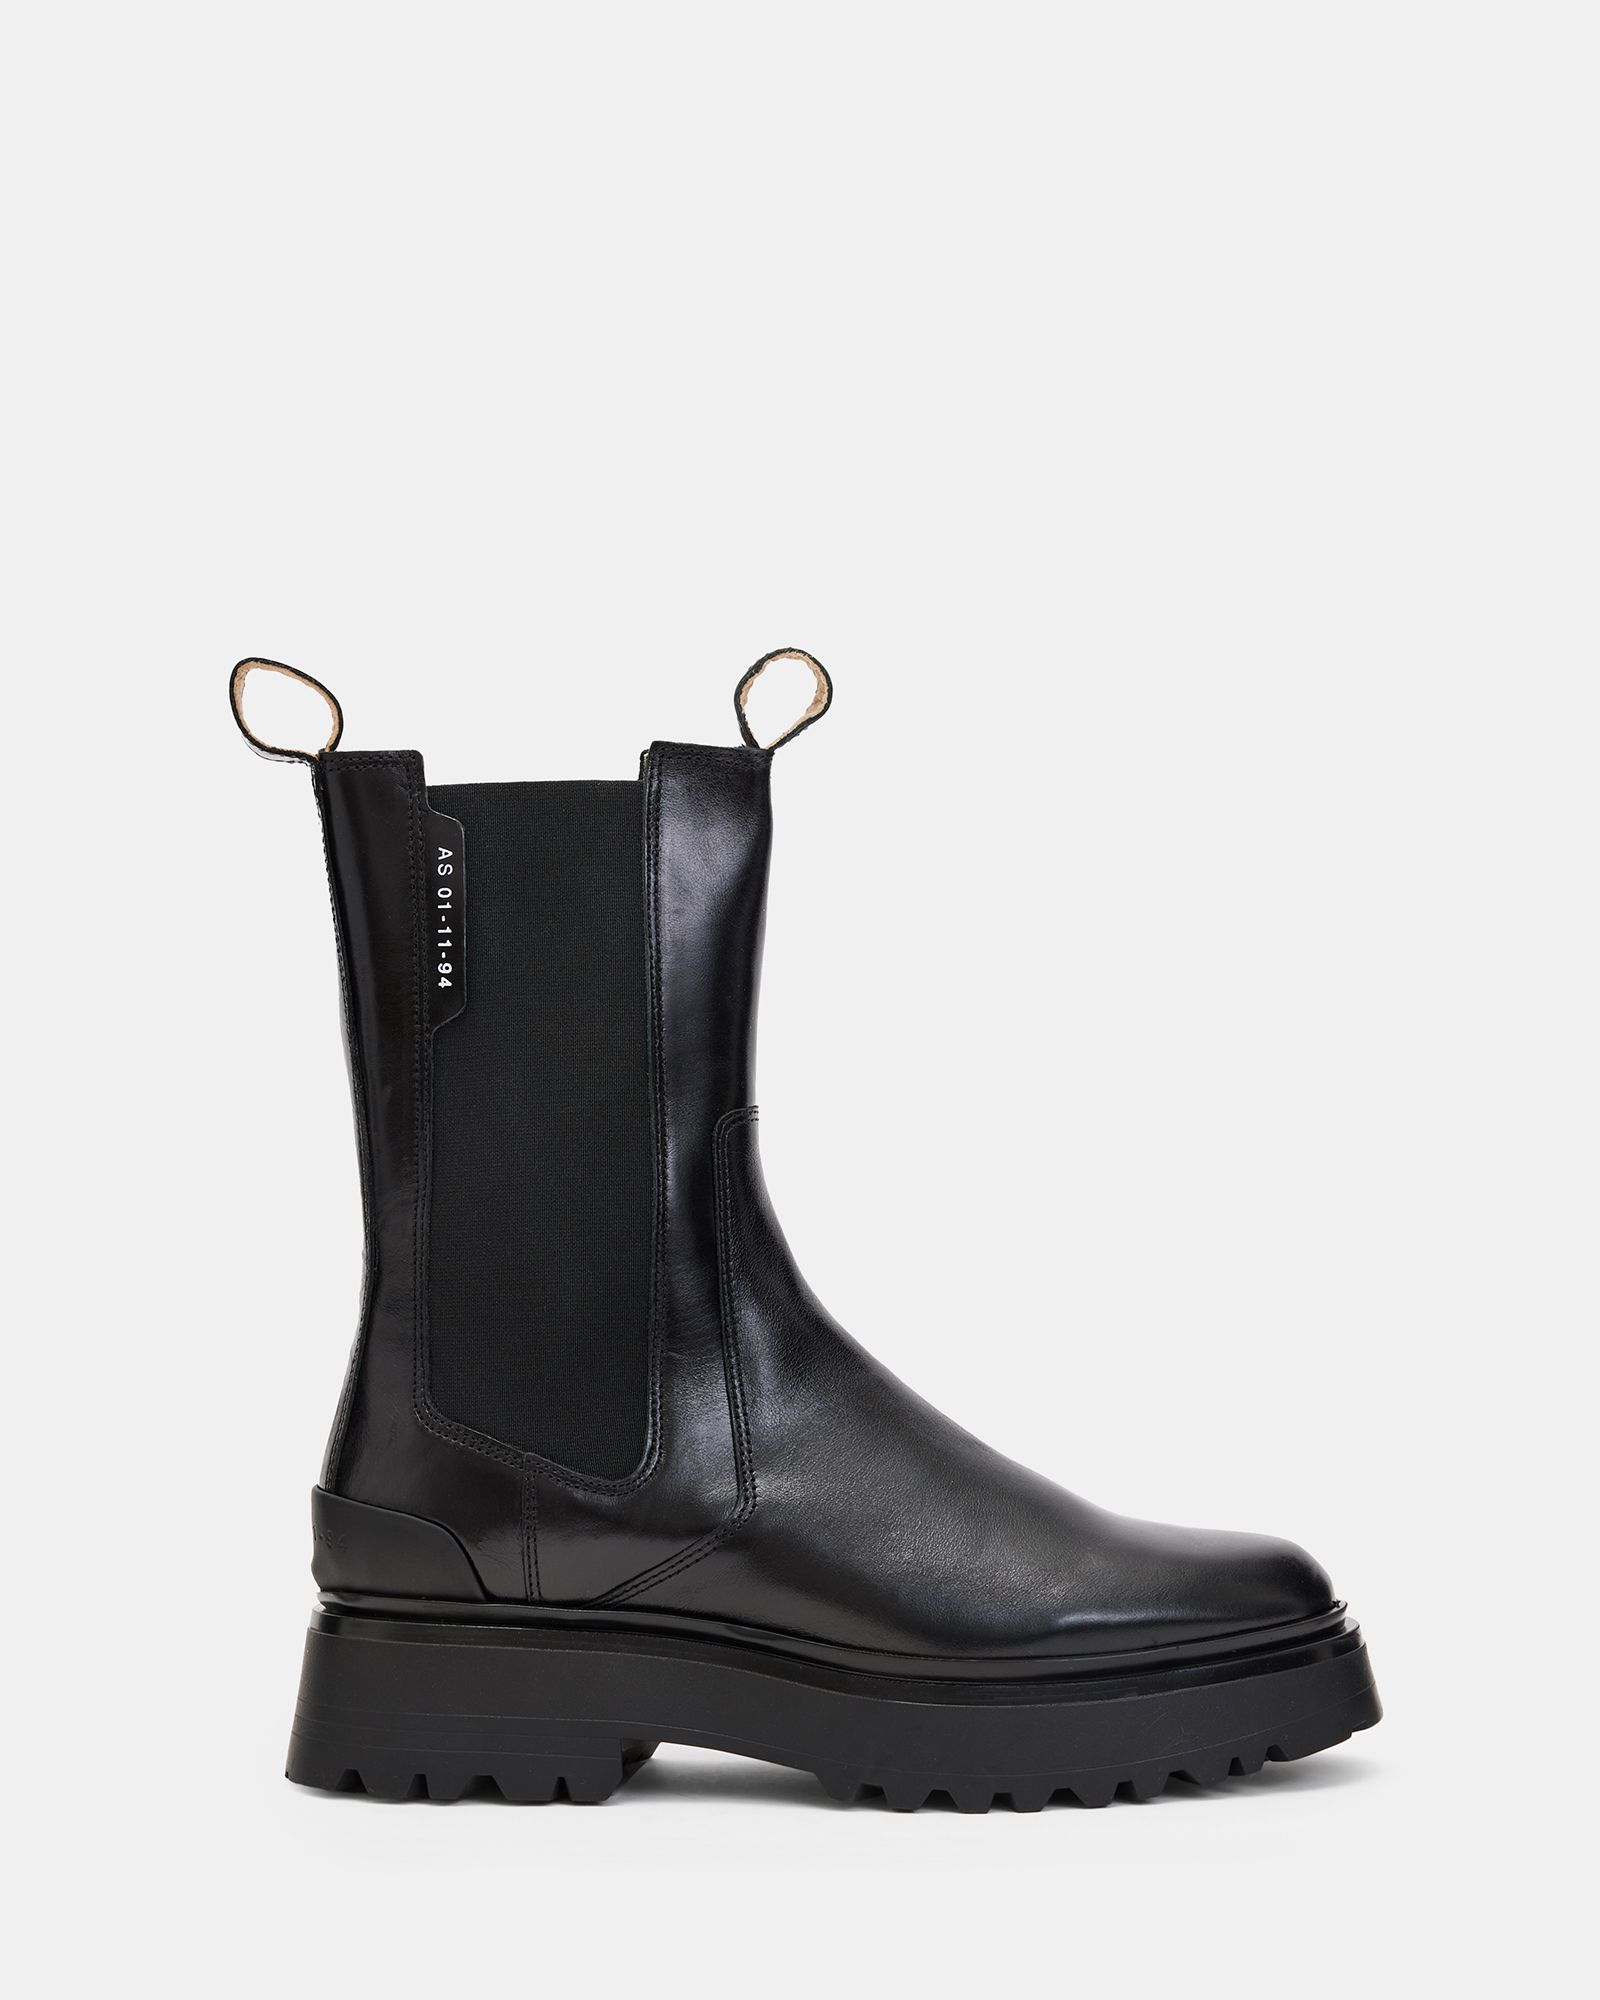 Amber Leather Boots Black | ALLSAINTS | AllSaints UK